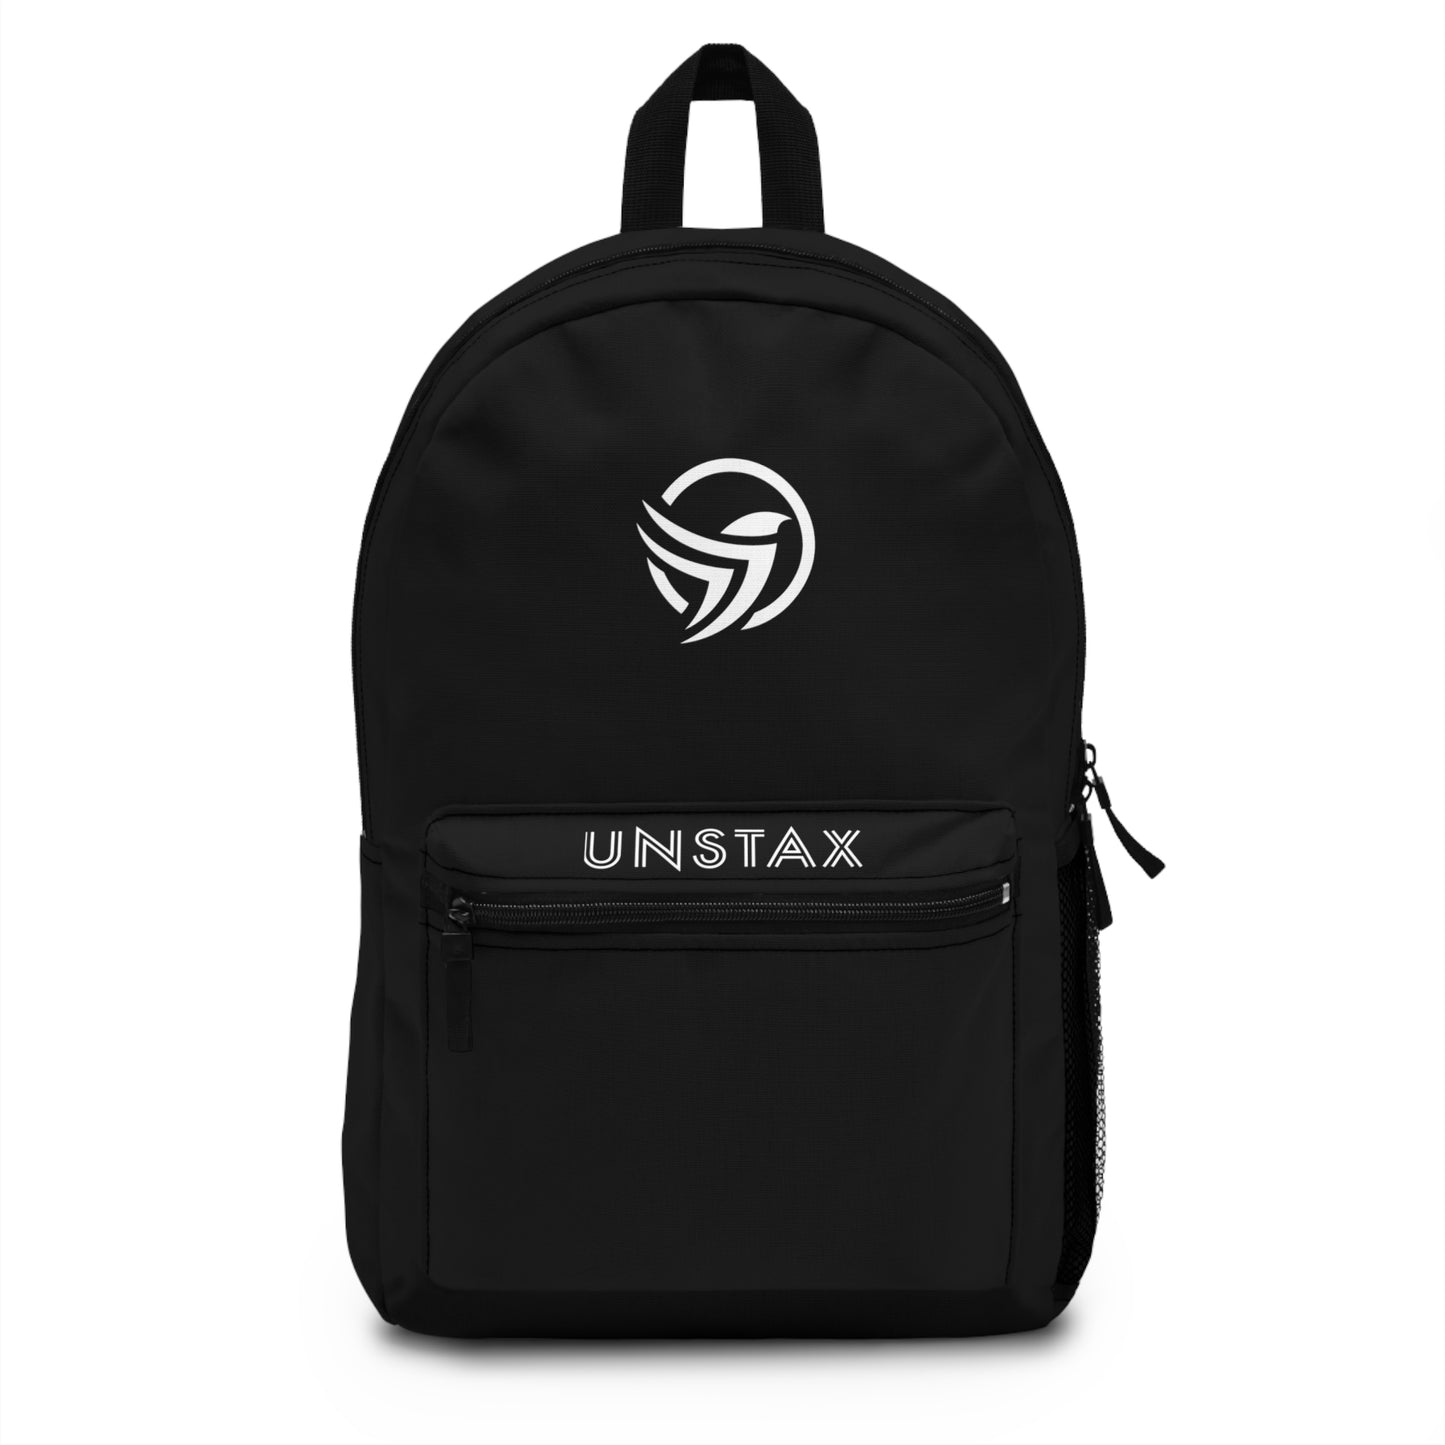 Unstax Original Backpack